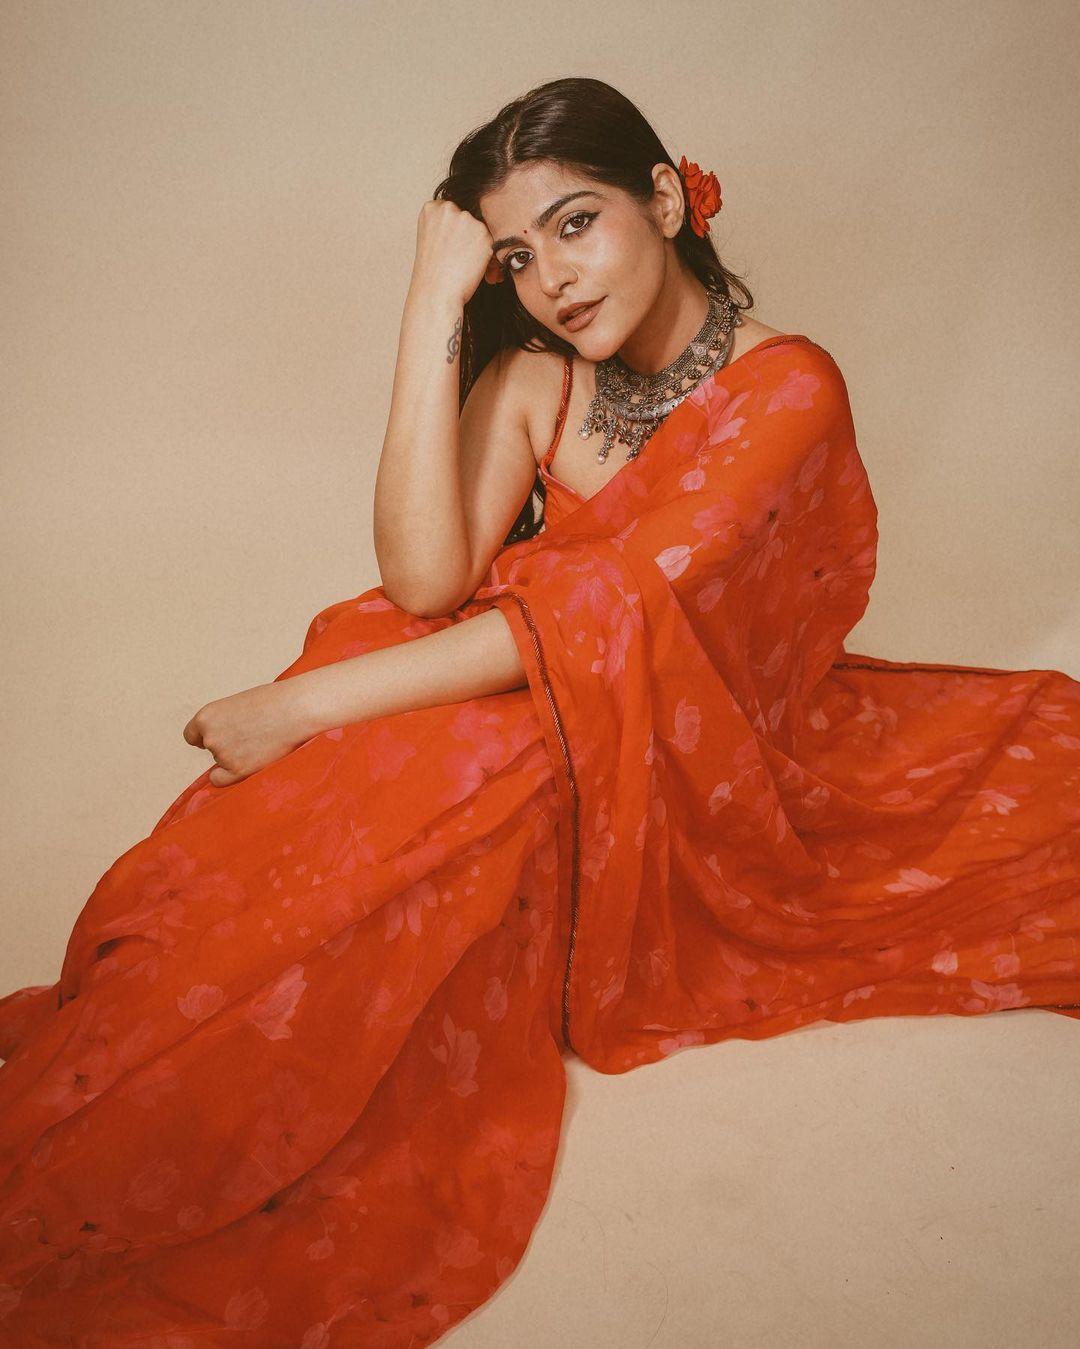 Elegant Poses In Saree You Must Try✨ Pretty Saree From @cheluva_collections  . . . . #sareeposes #sareelove #elegantpose #poseideas #s... | Instagram